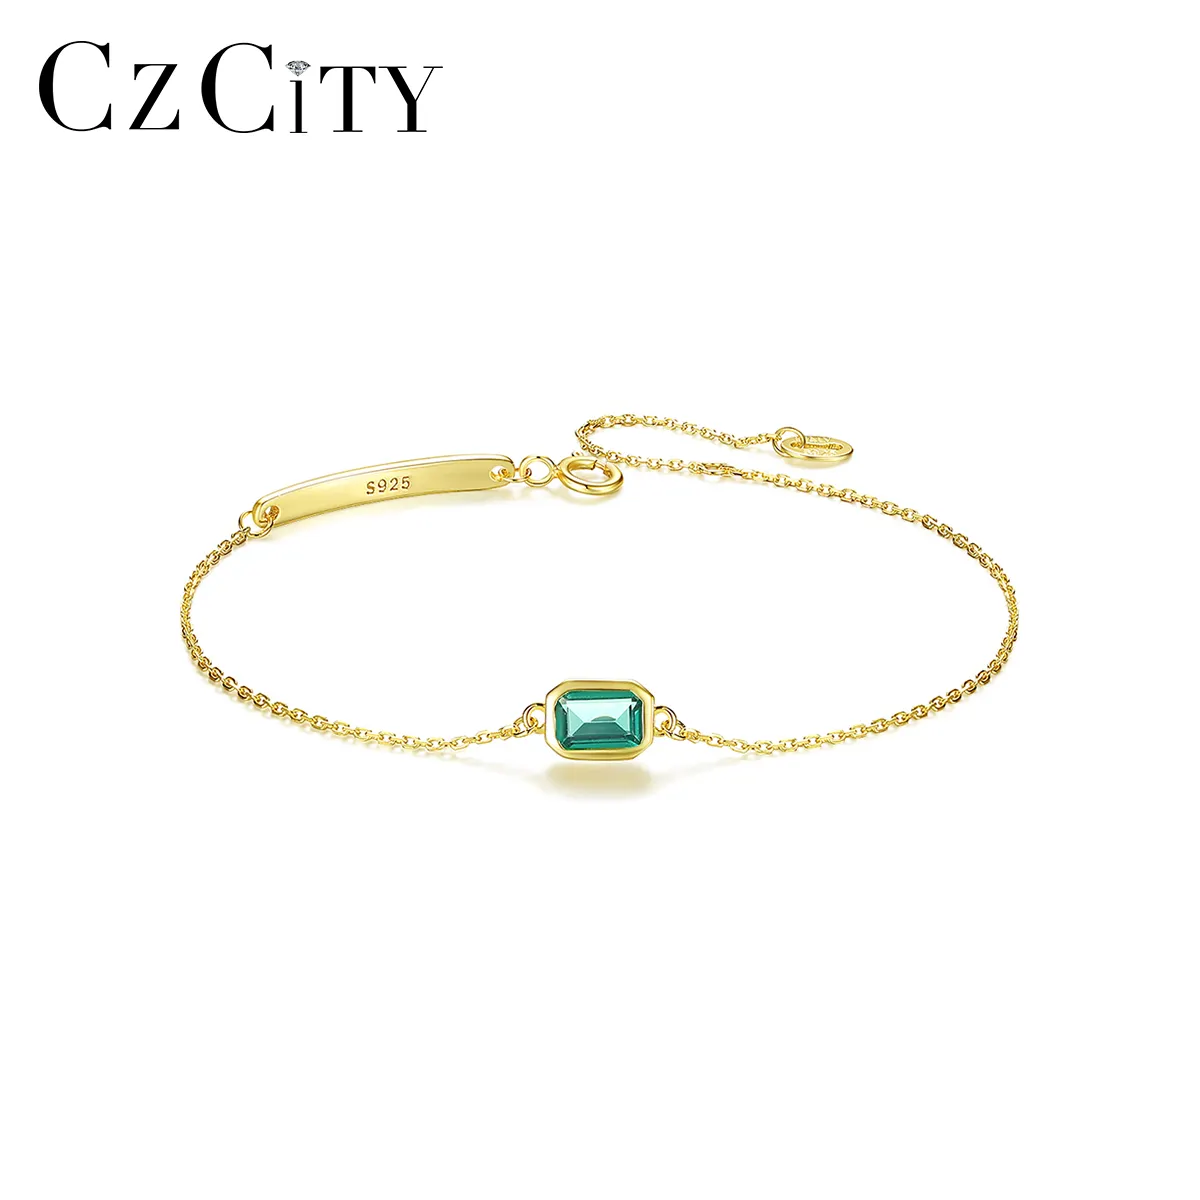 CZCITY Emerald Green 18K Gold Plated Chain Link 925 Silver Gemstone Crystal Adjustable Charm Bracelet